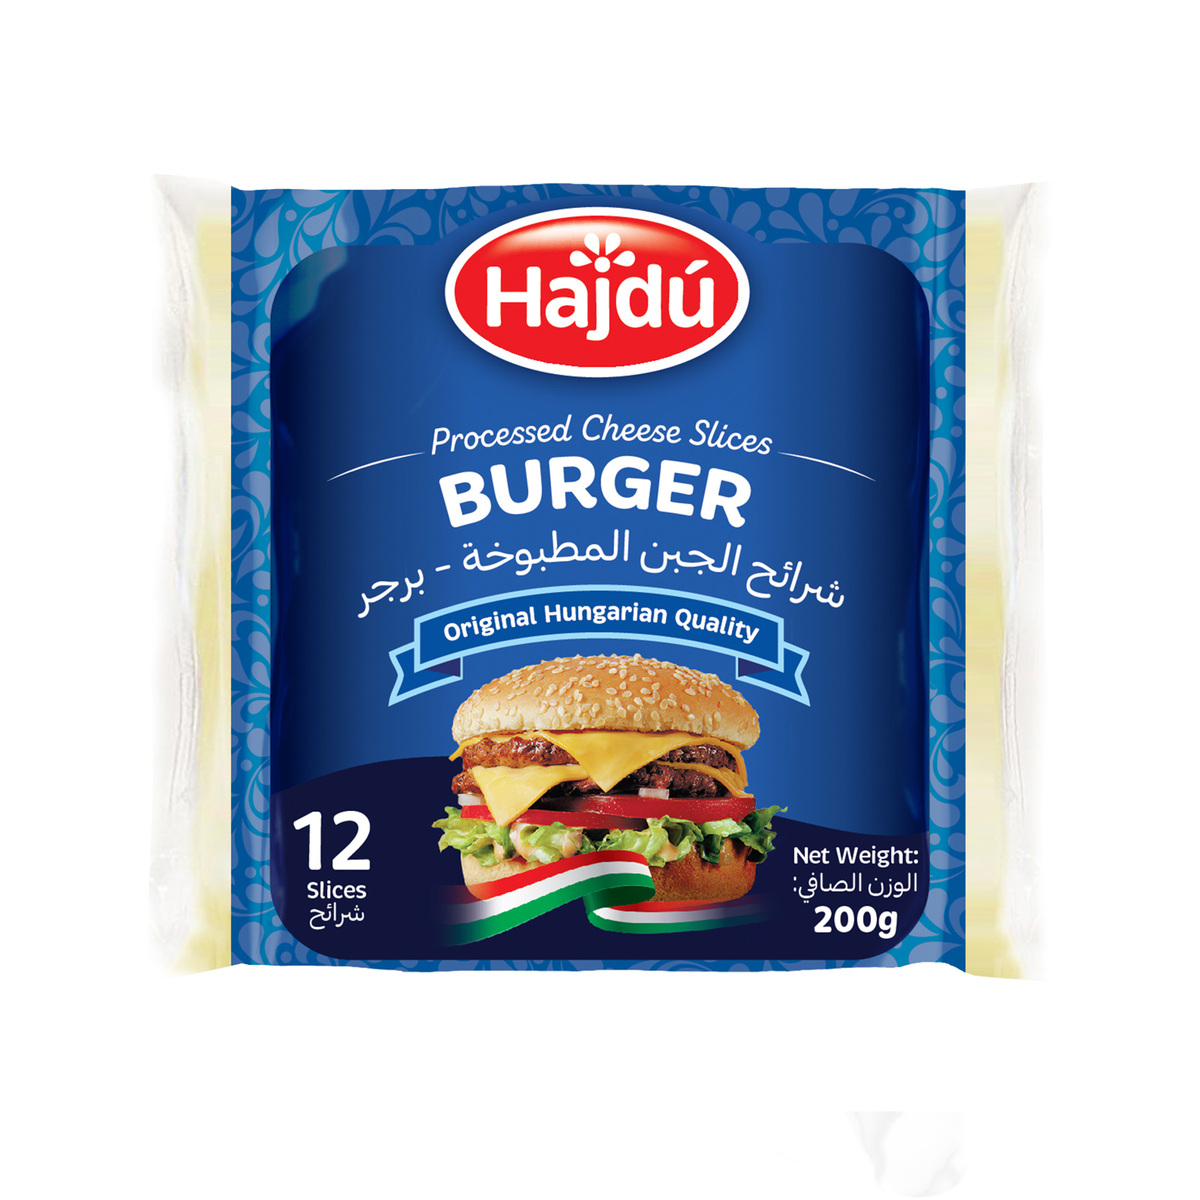 Hajdu Burger Processed Cheese Slices, 12 pcs, 200 g